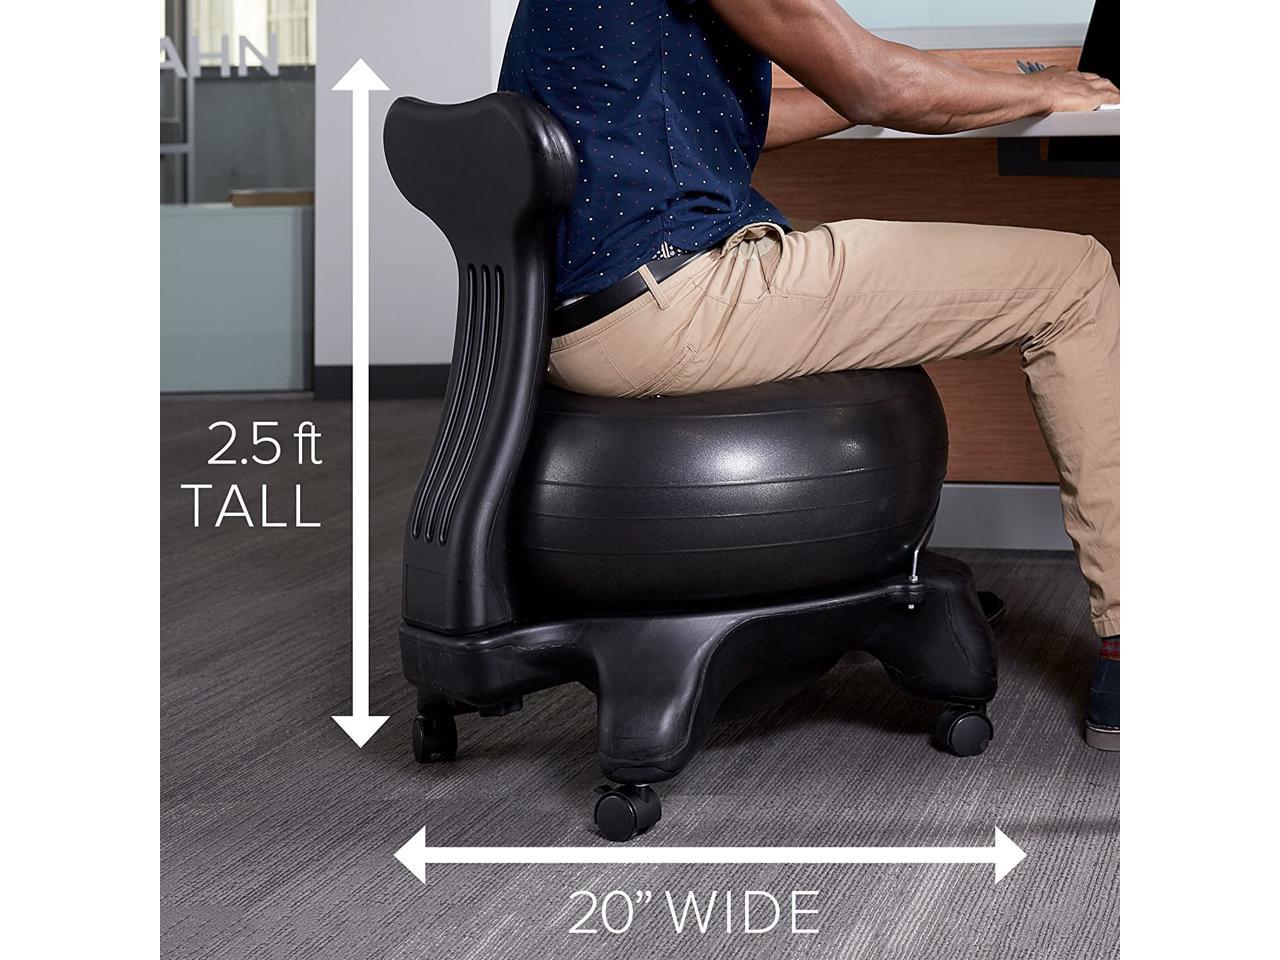 Classic Balance Ball Chair Exercise Stability Premium Ergonomic Chair 